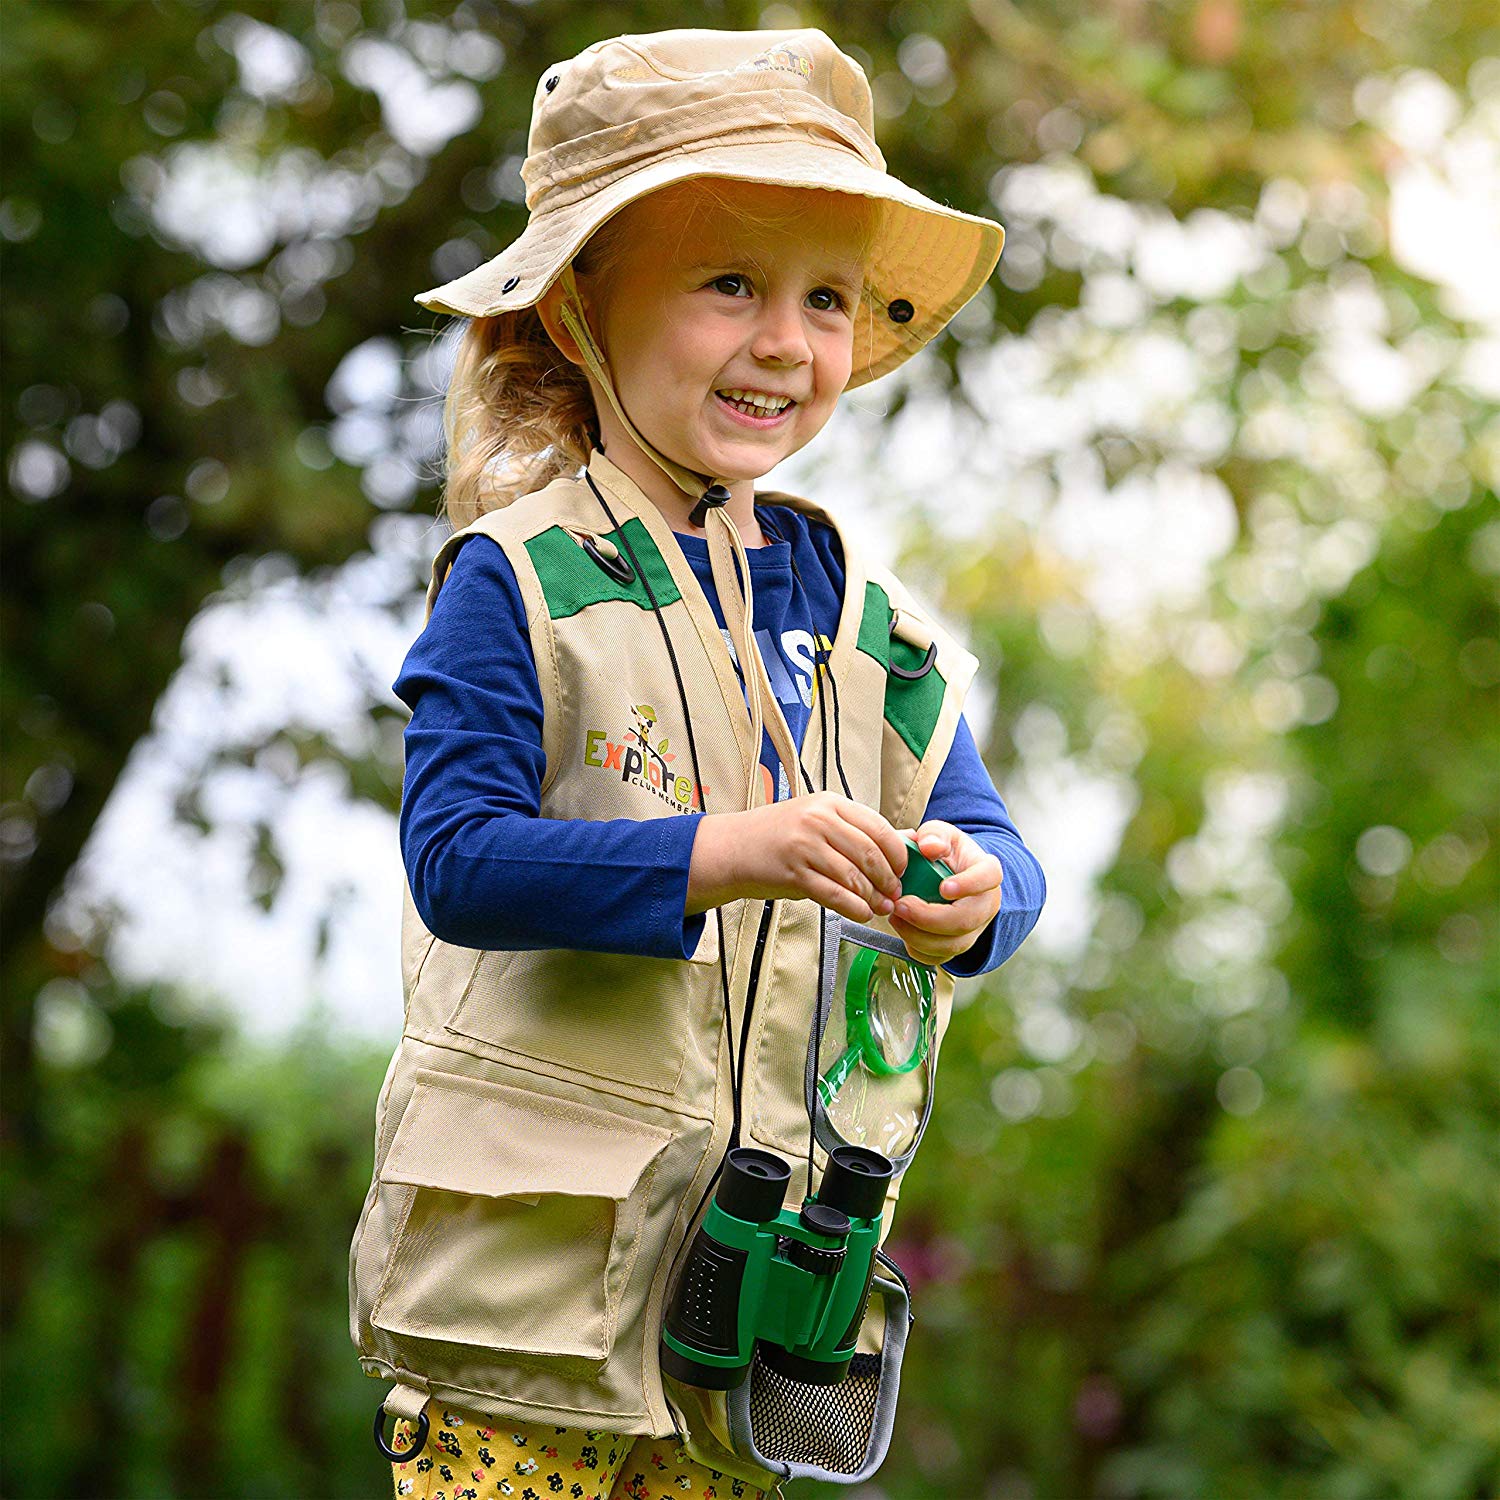 Cheerful Children Toys Kids Explorer Kit Bug Hunting Kit Explorer Costume  includes Explorer Hat Cargo Vest for 3-7 year old boys girls Outdoor 